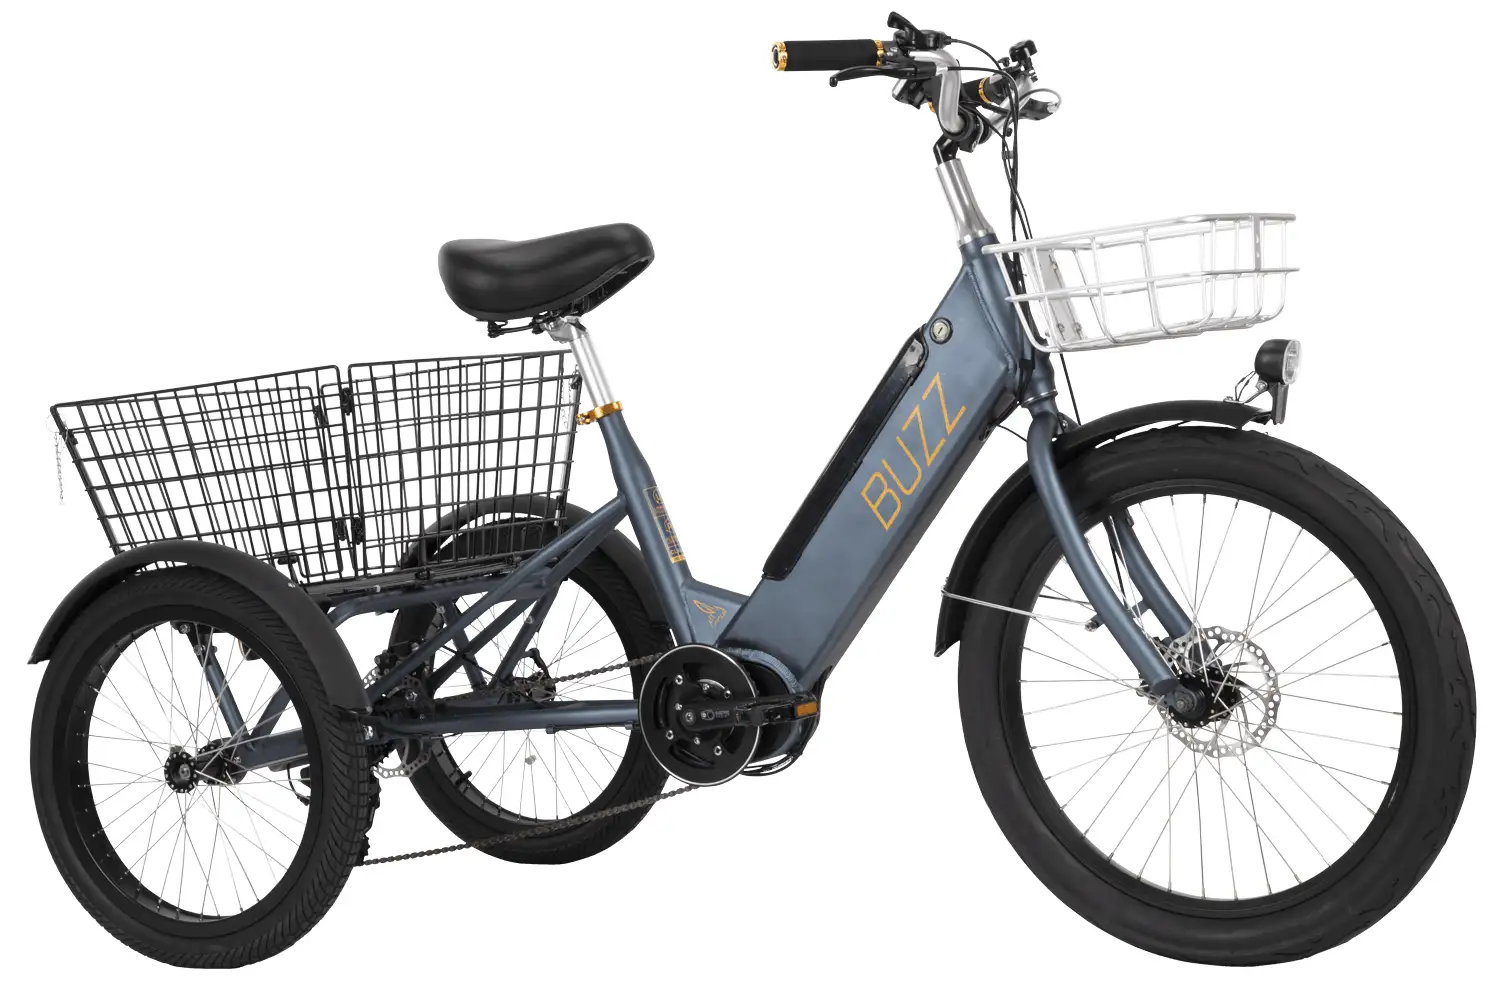 Buzz Cerana electric tricycle